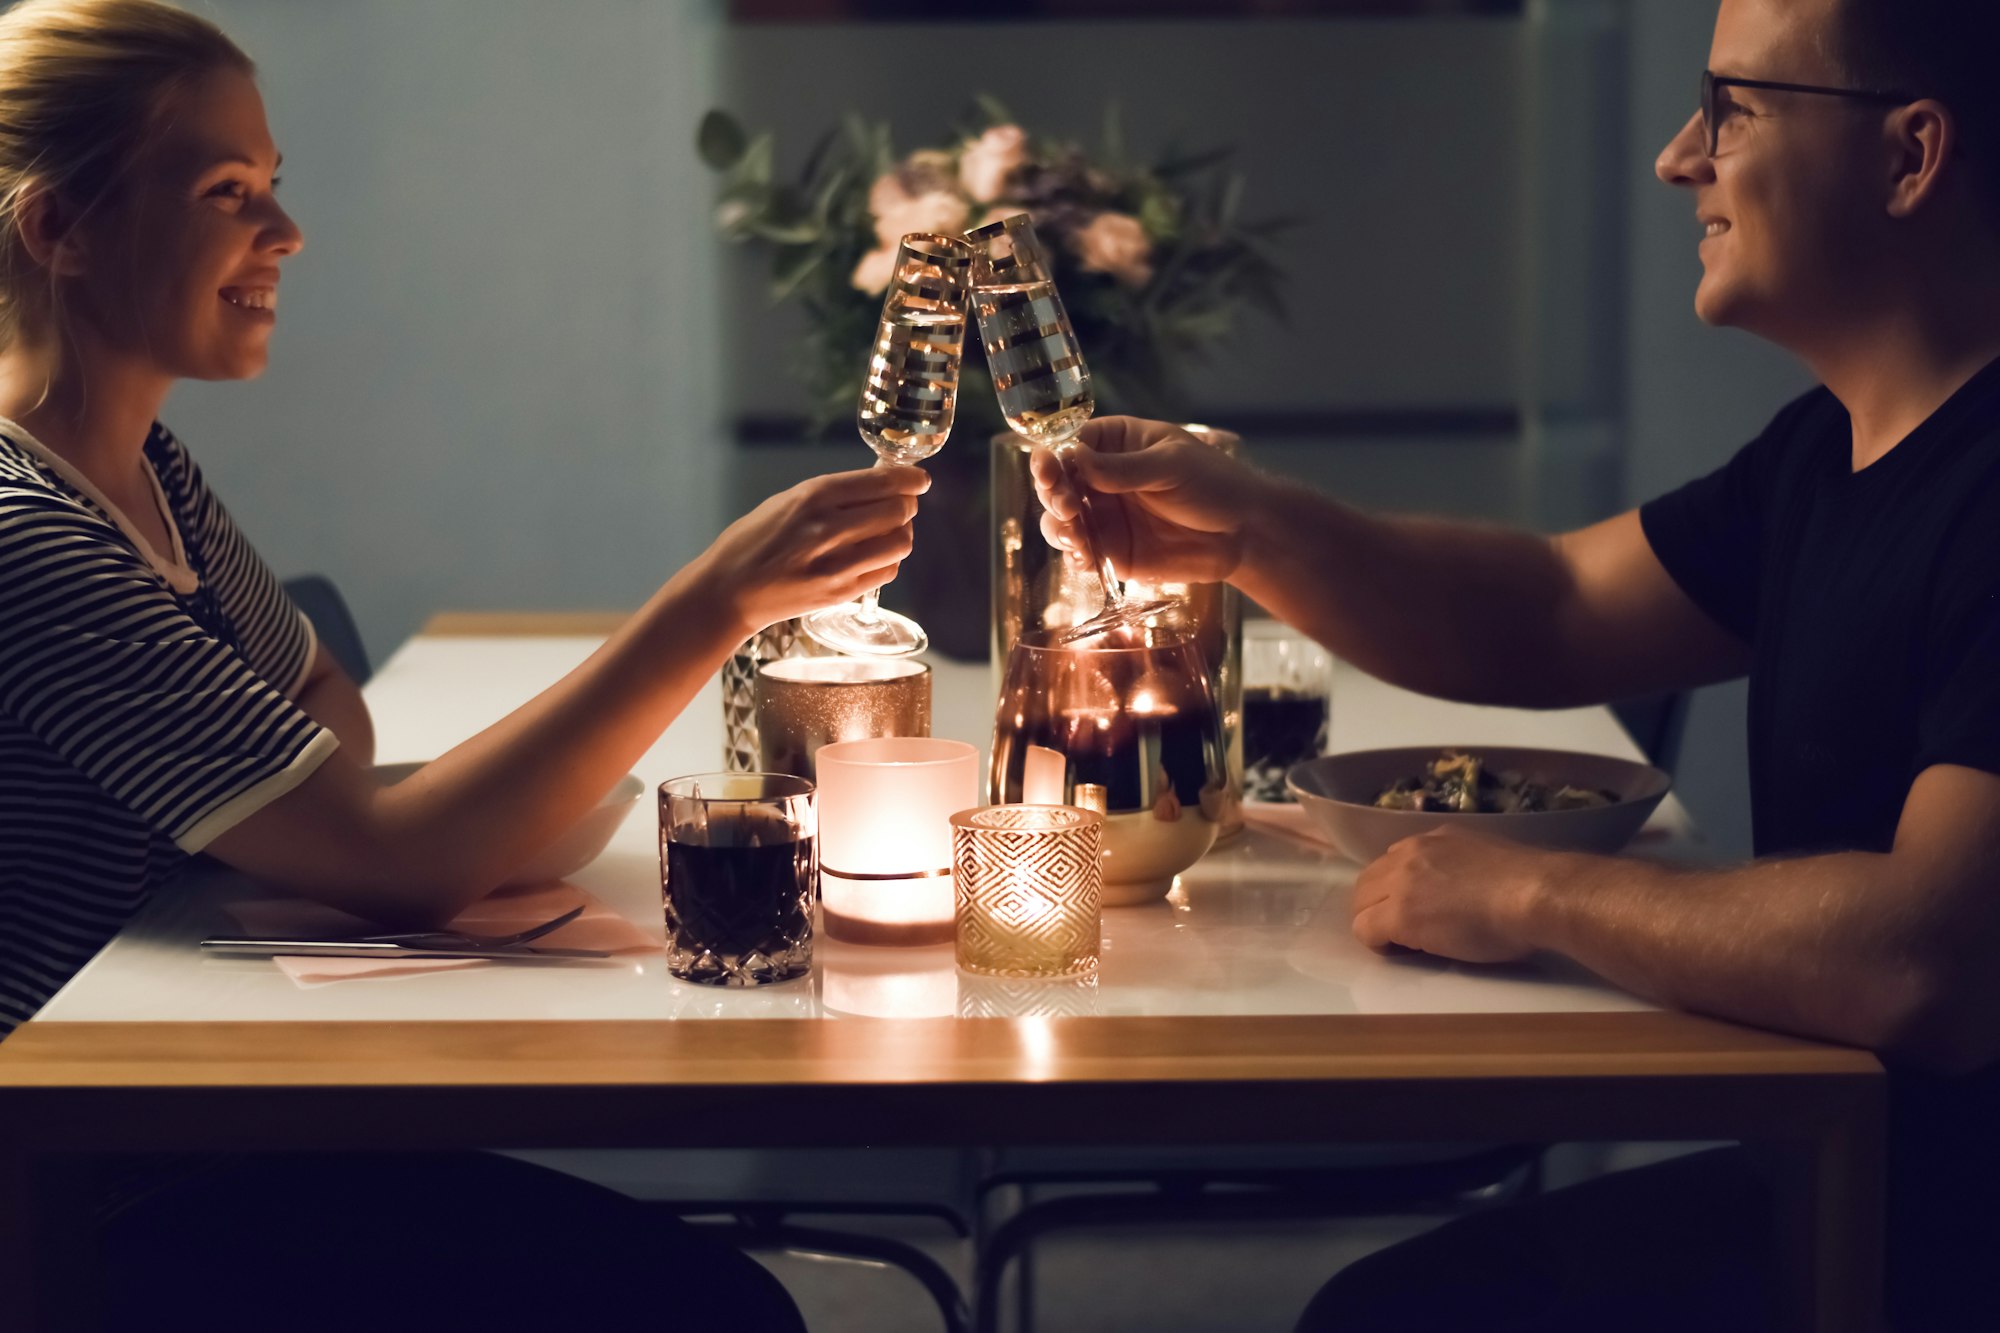 Couple enjoying romantic dinner at home